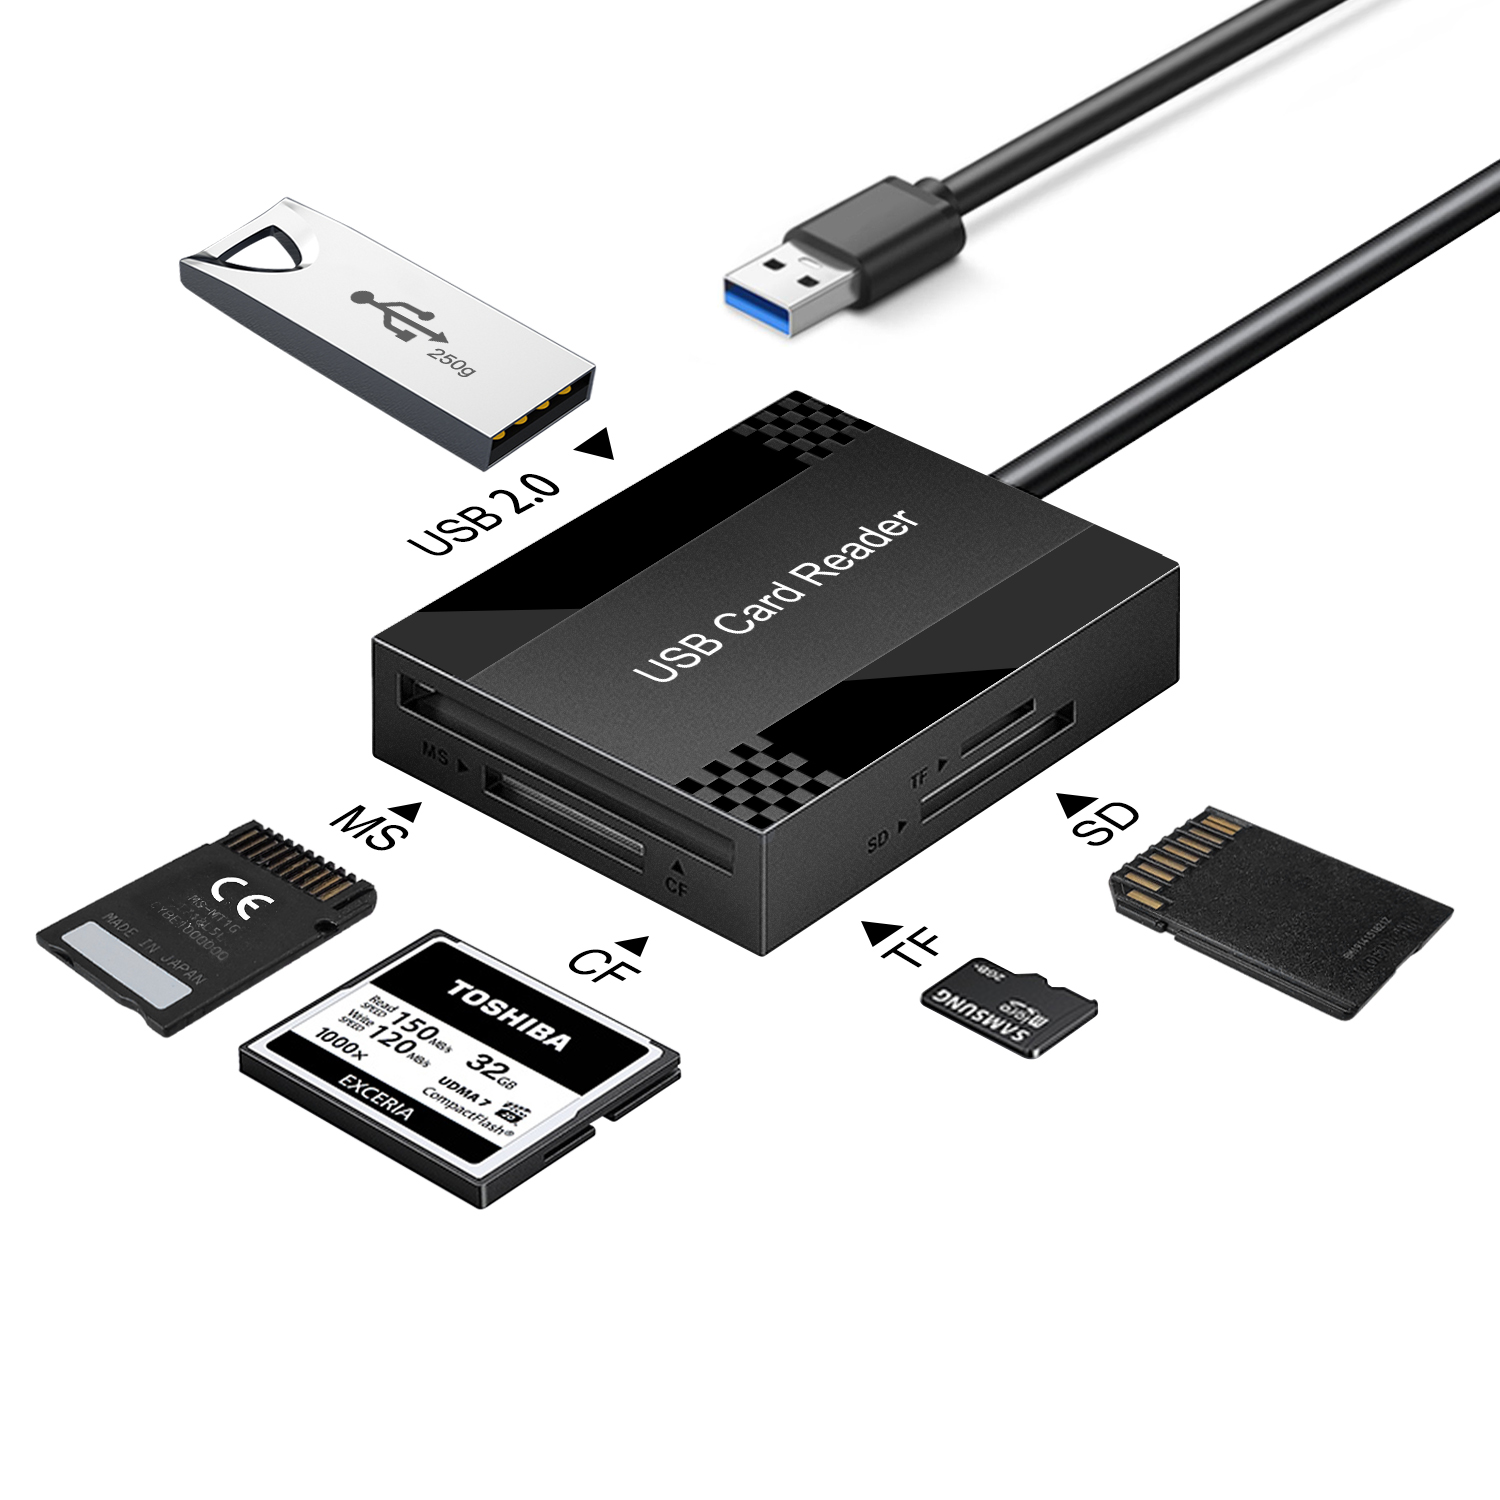 GV-UH001 5-IN-1 USB 3.0 Card Reader